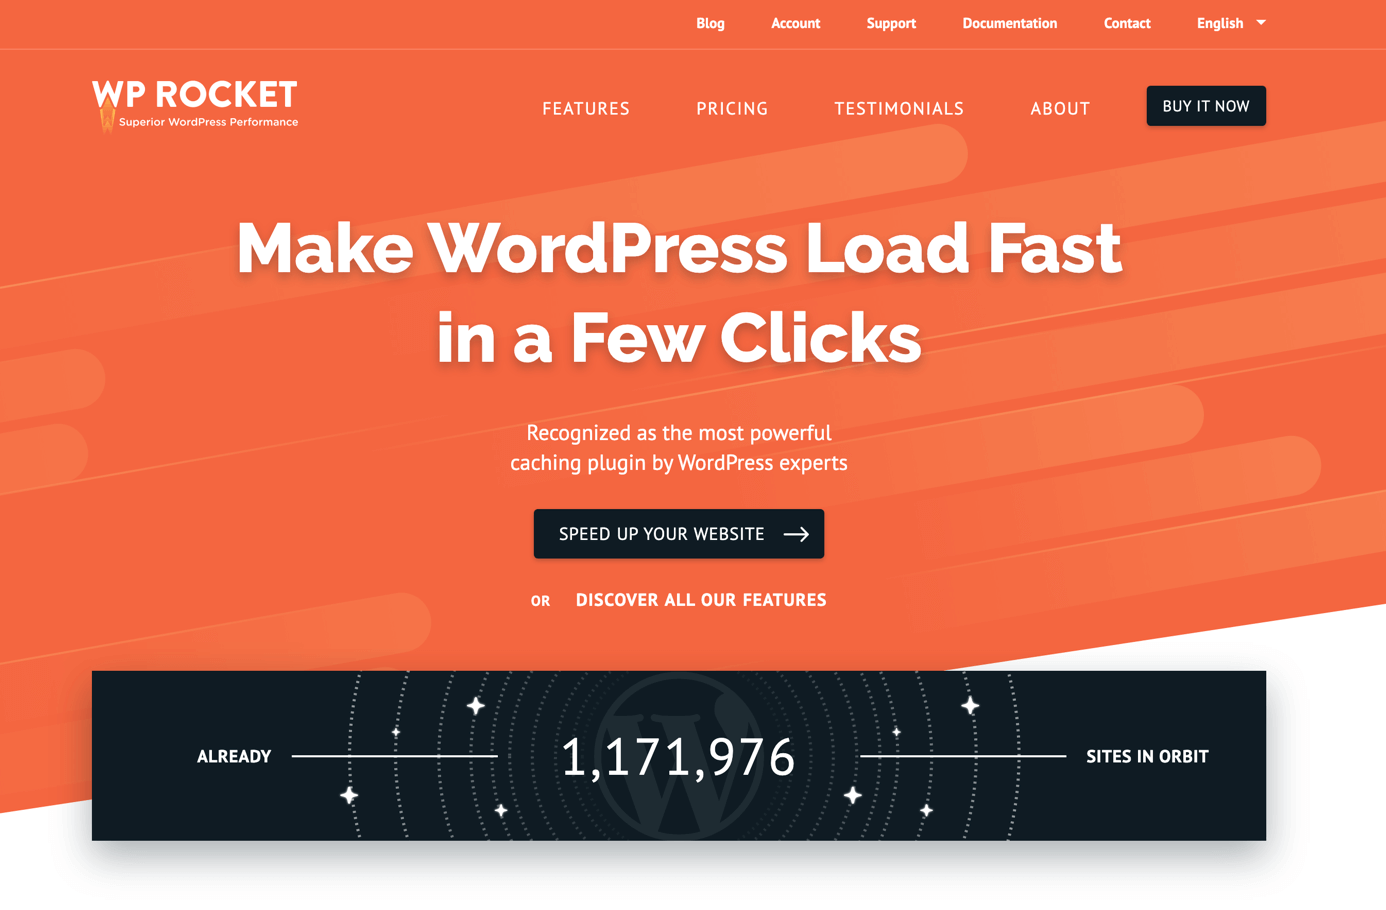 WP Rocket is a premium WordPress caching plug-in